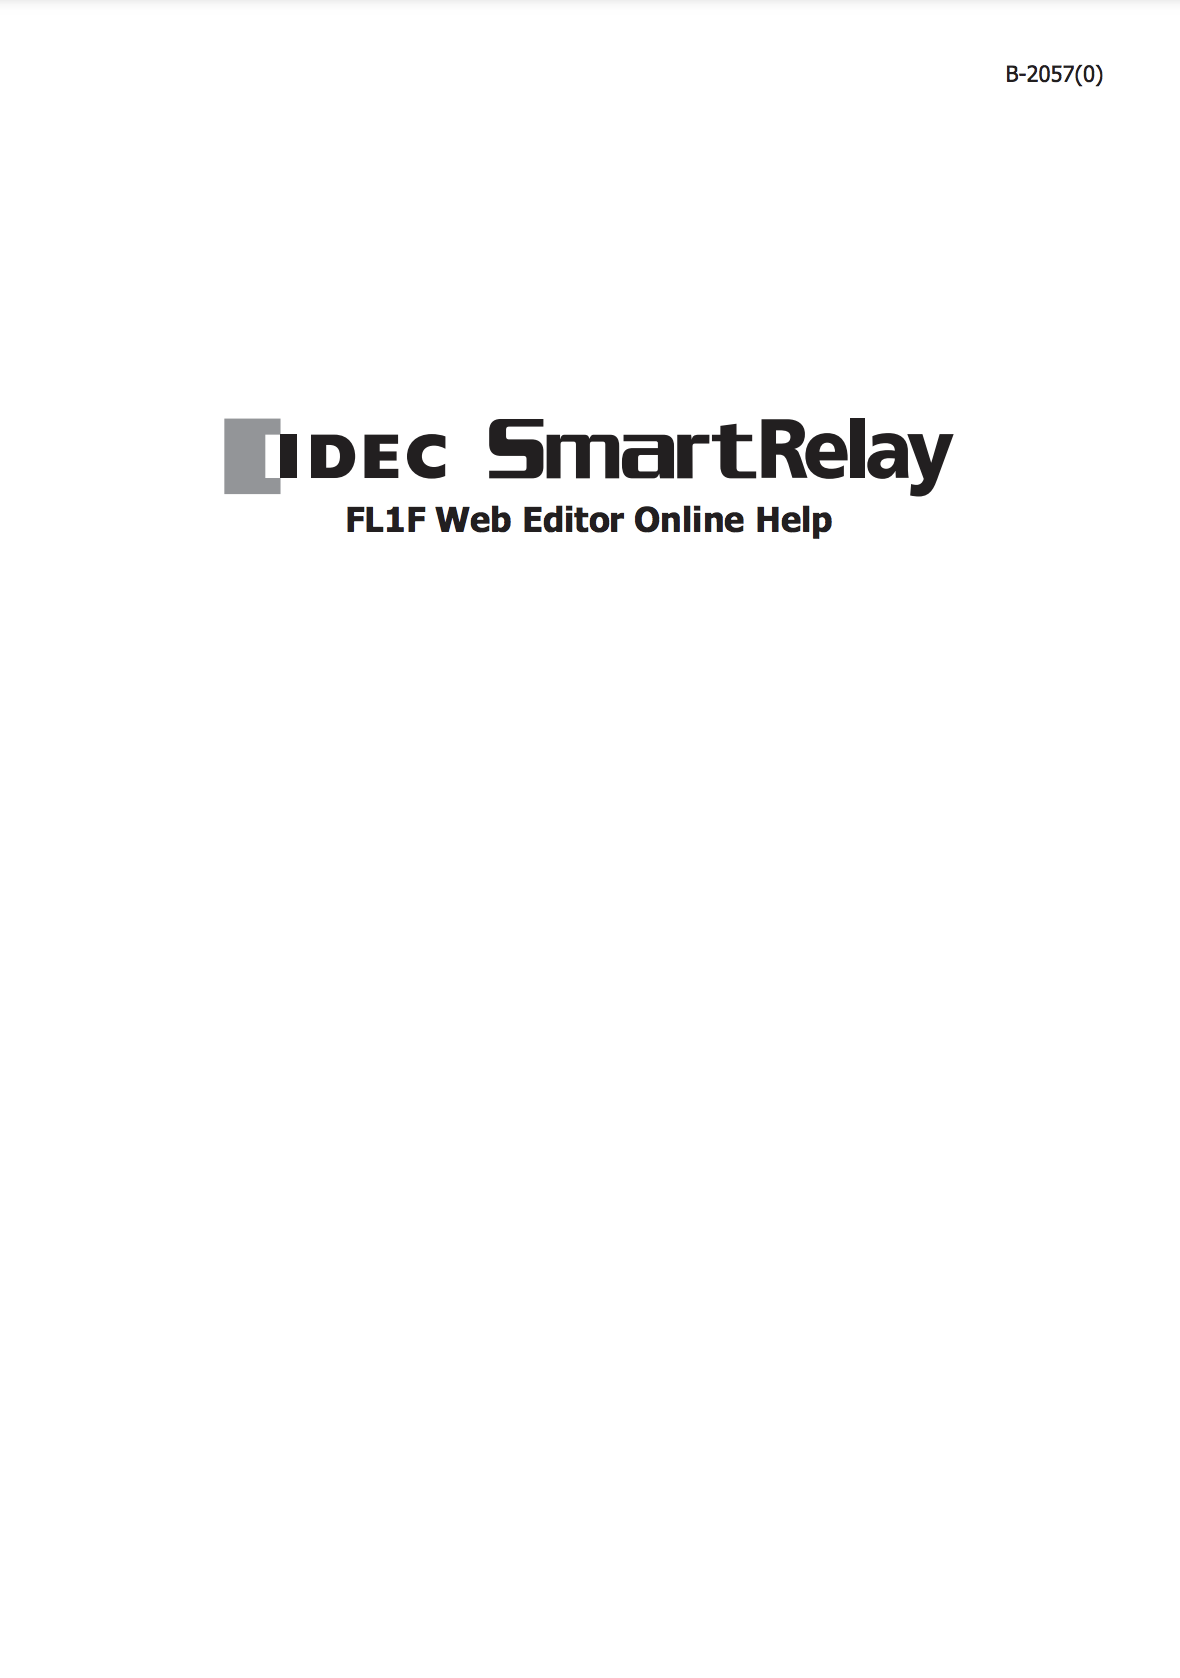 IDEC FL1F SmartRelay Web Editor Manual